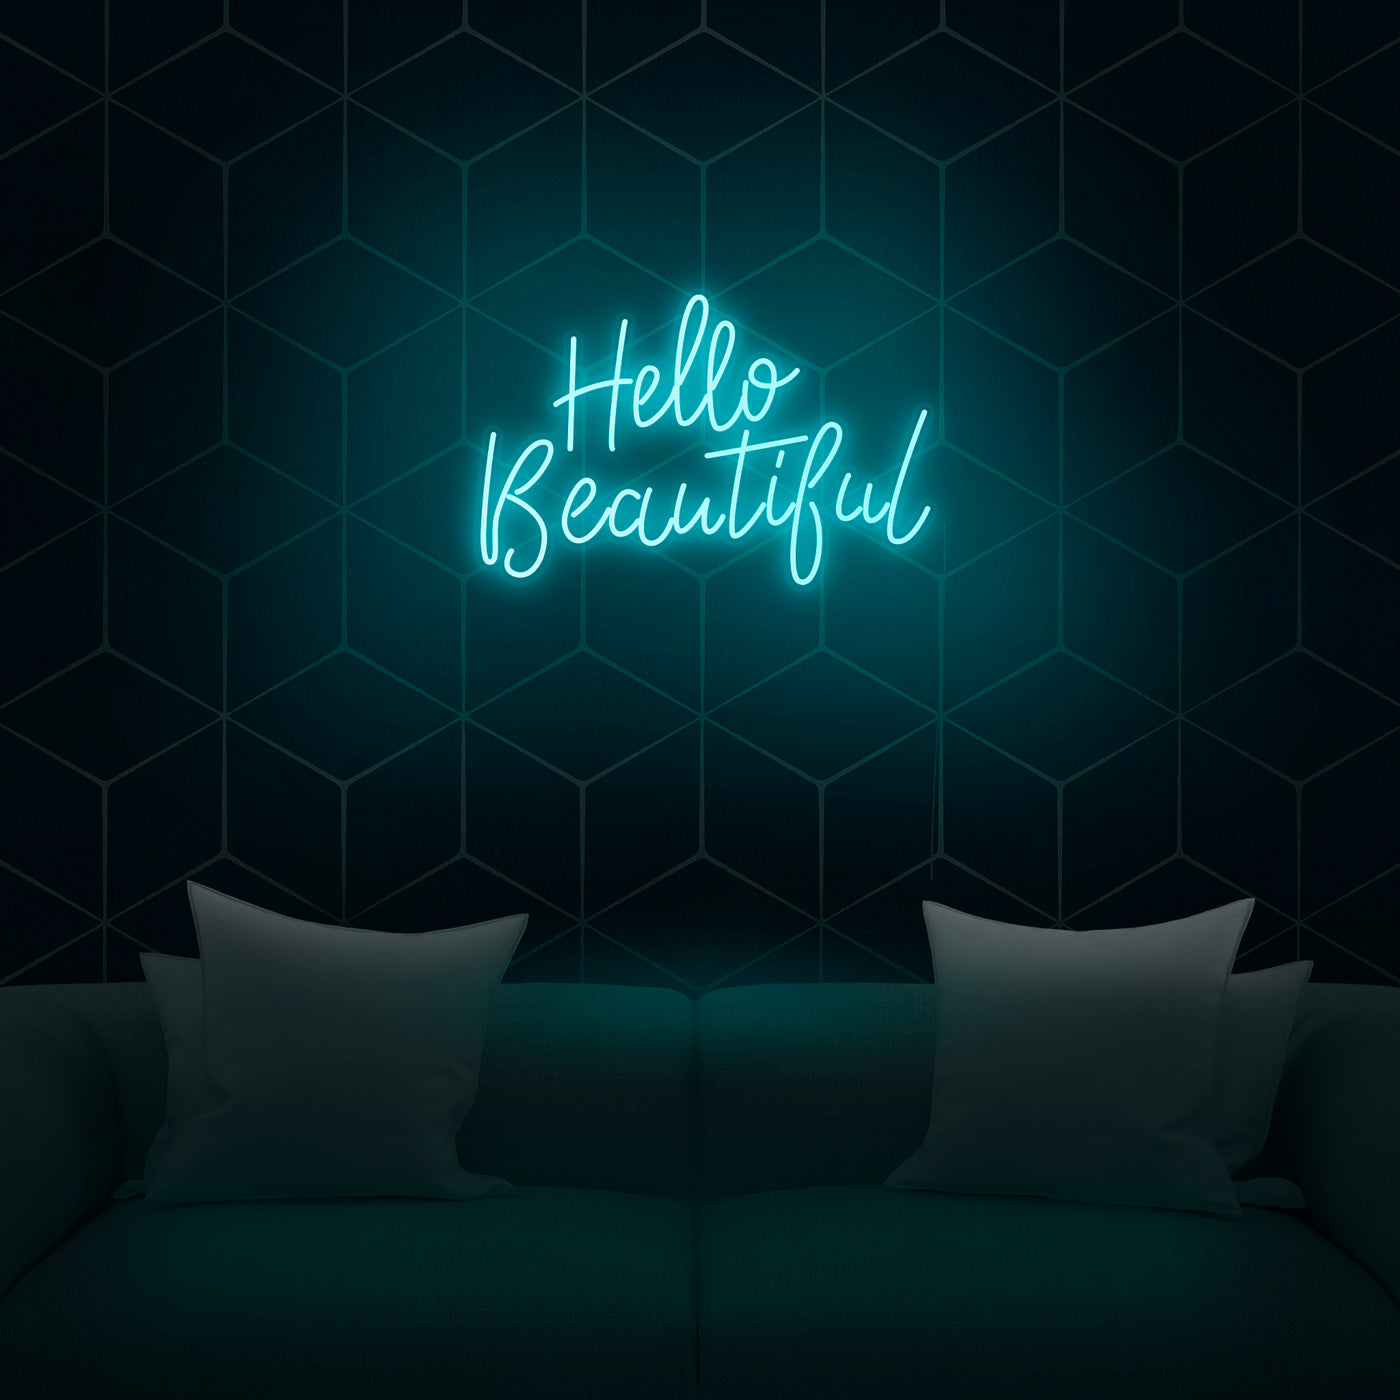 'Hello Beautiful' Neon Sign - Nuwave Neon